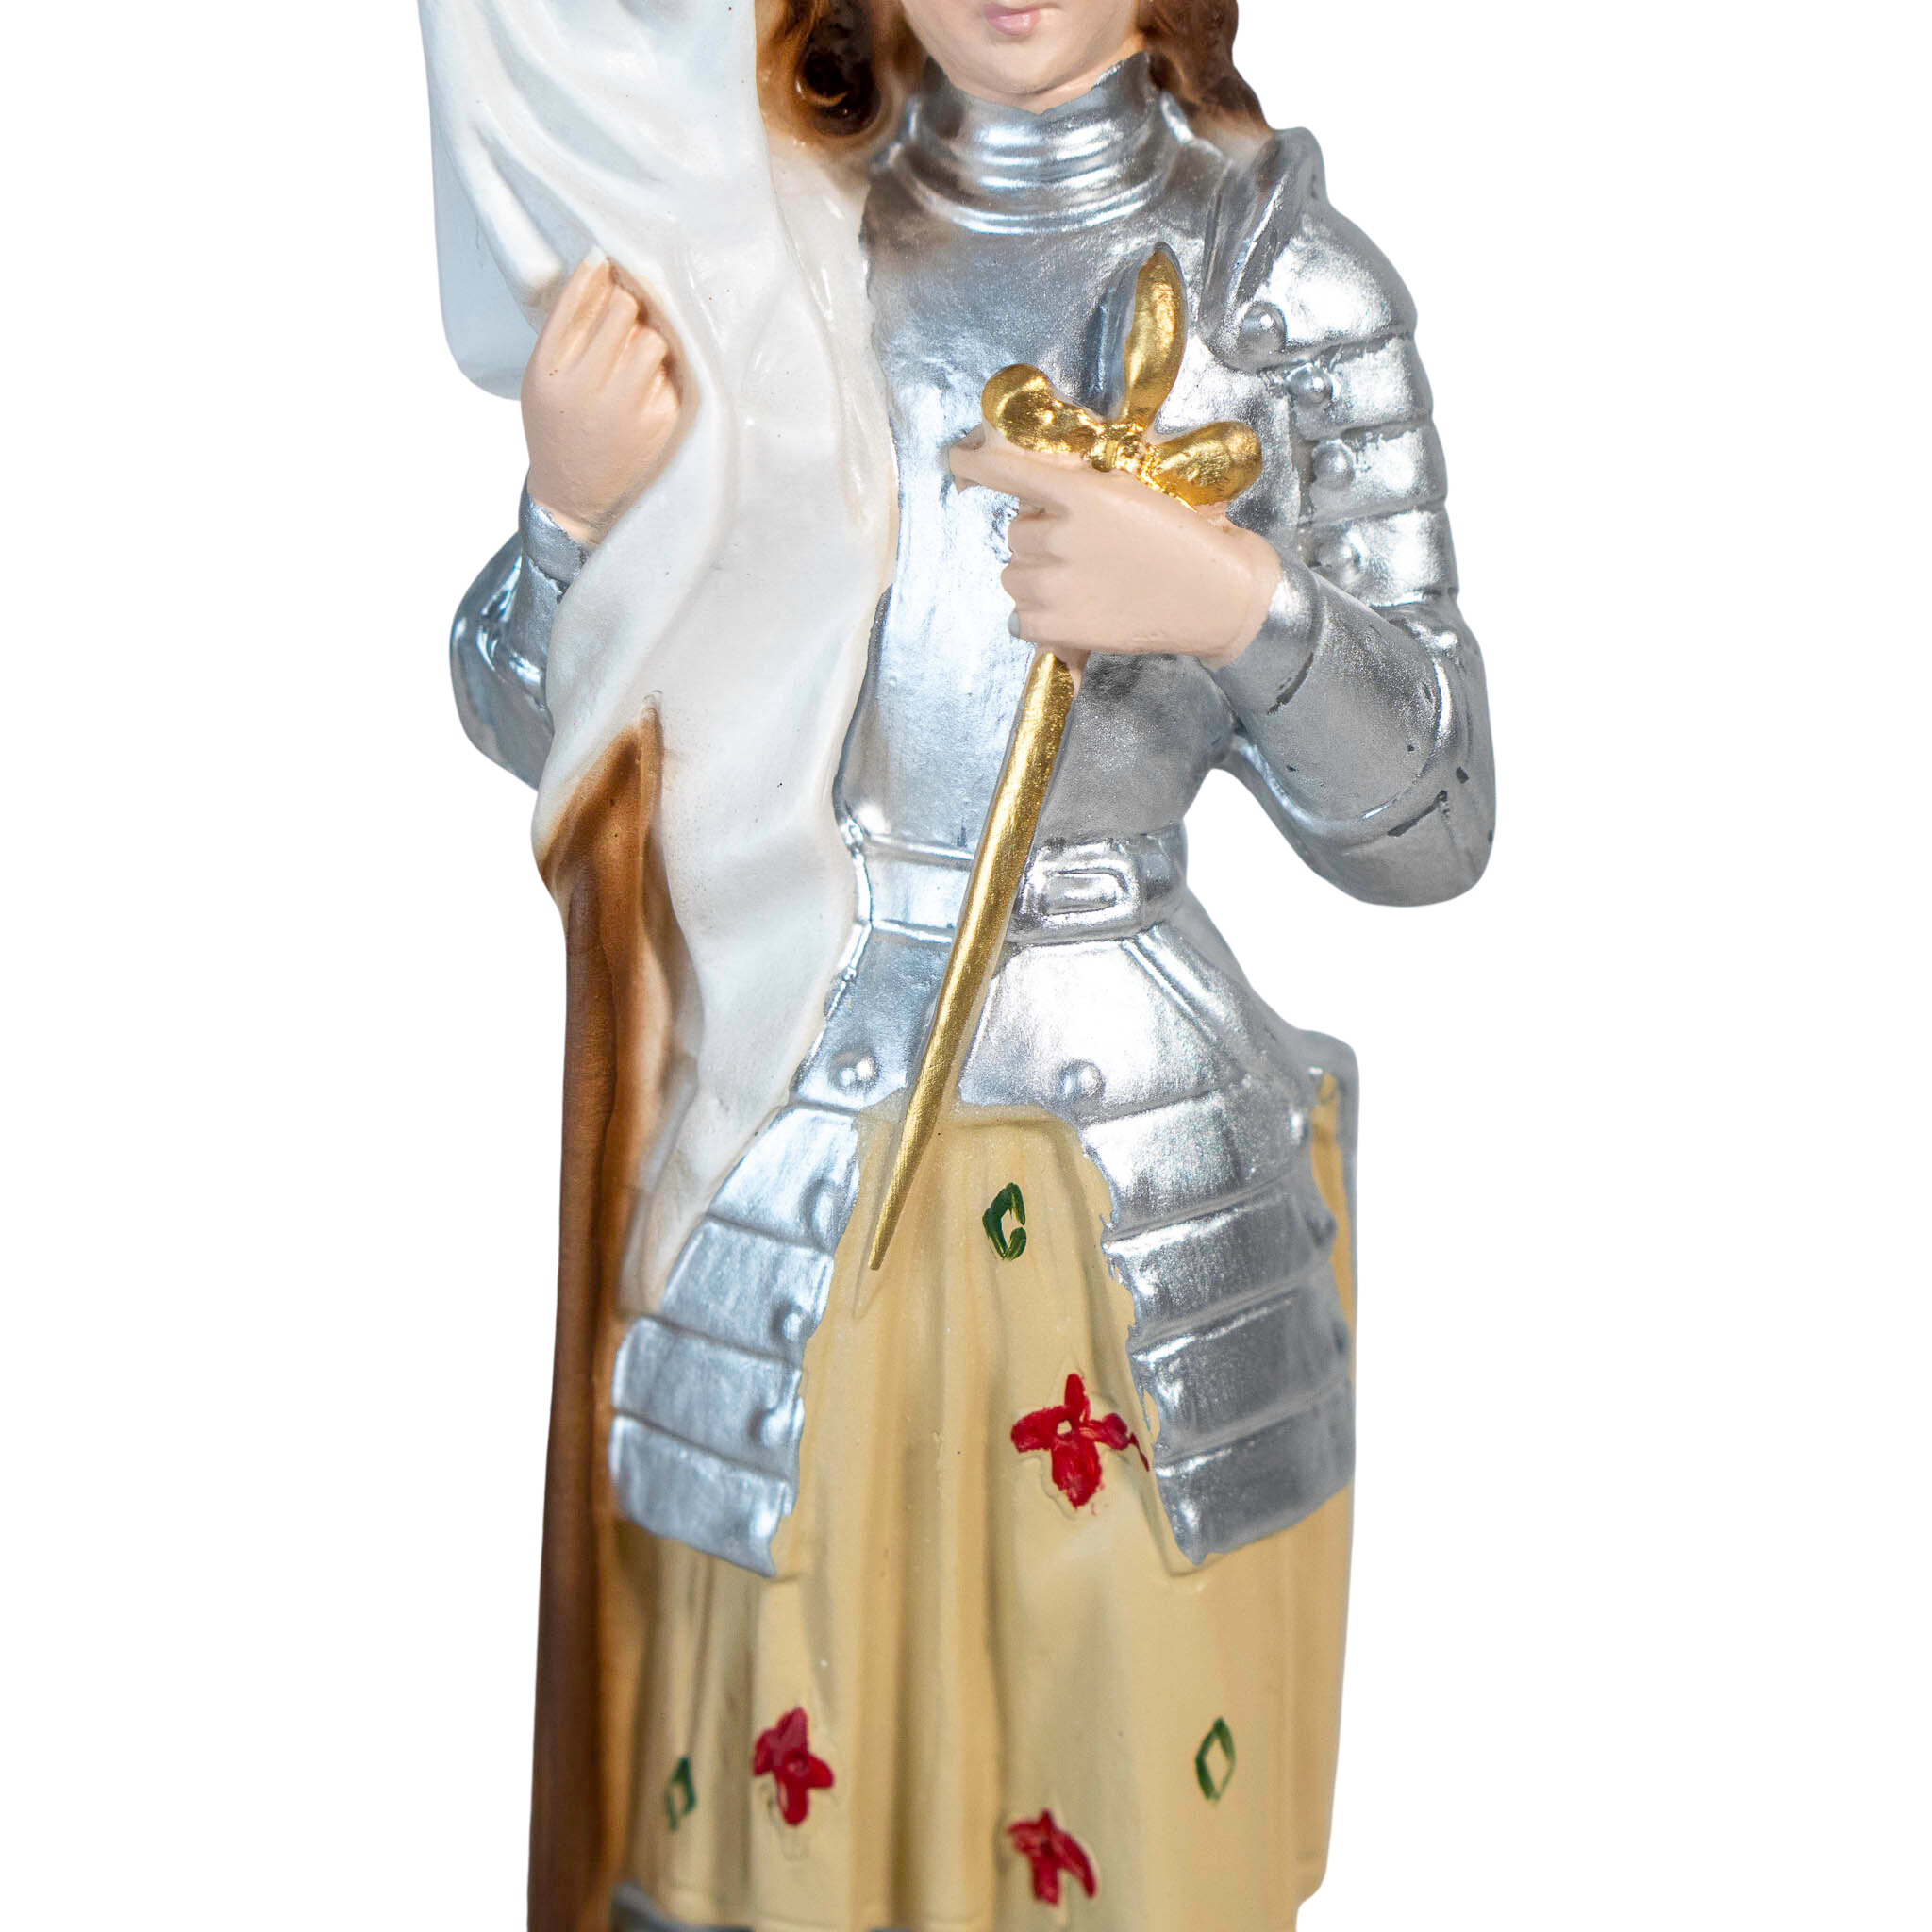 The Faith Gift Shop Saint Joan the Arc statue - Hand Painted in Italy - Our Tuscany Collection - Estatua de Santa Juana de Arco